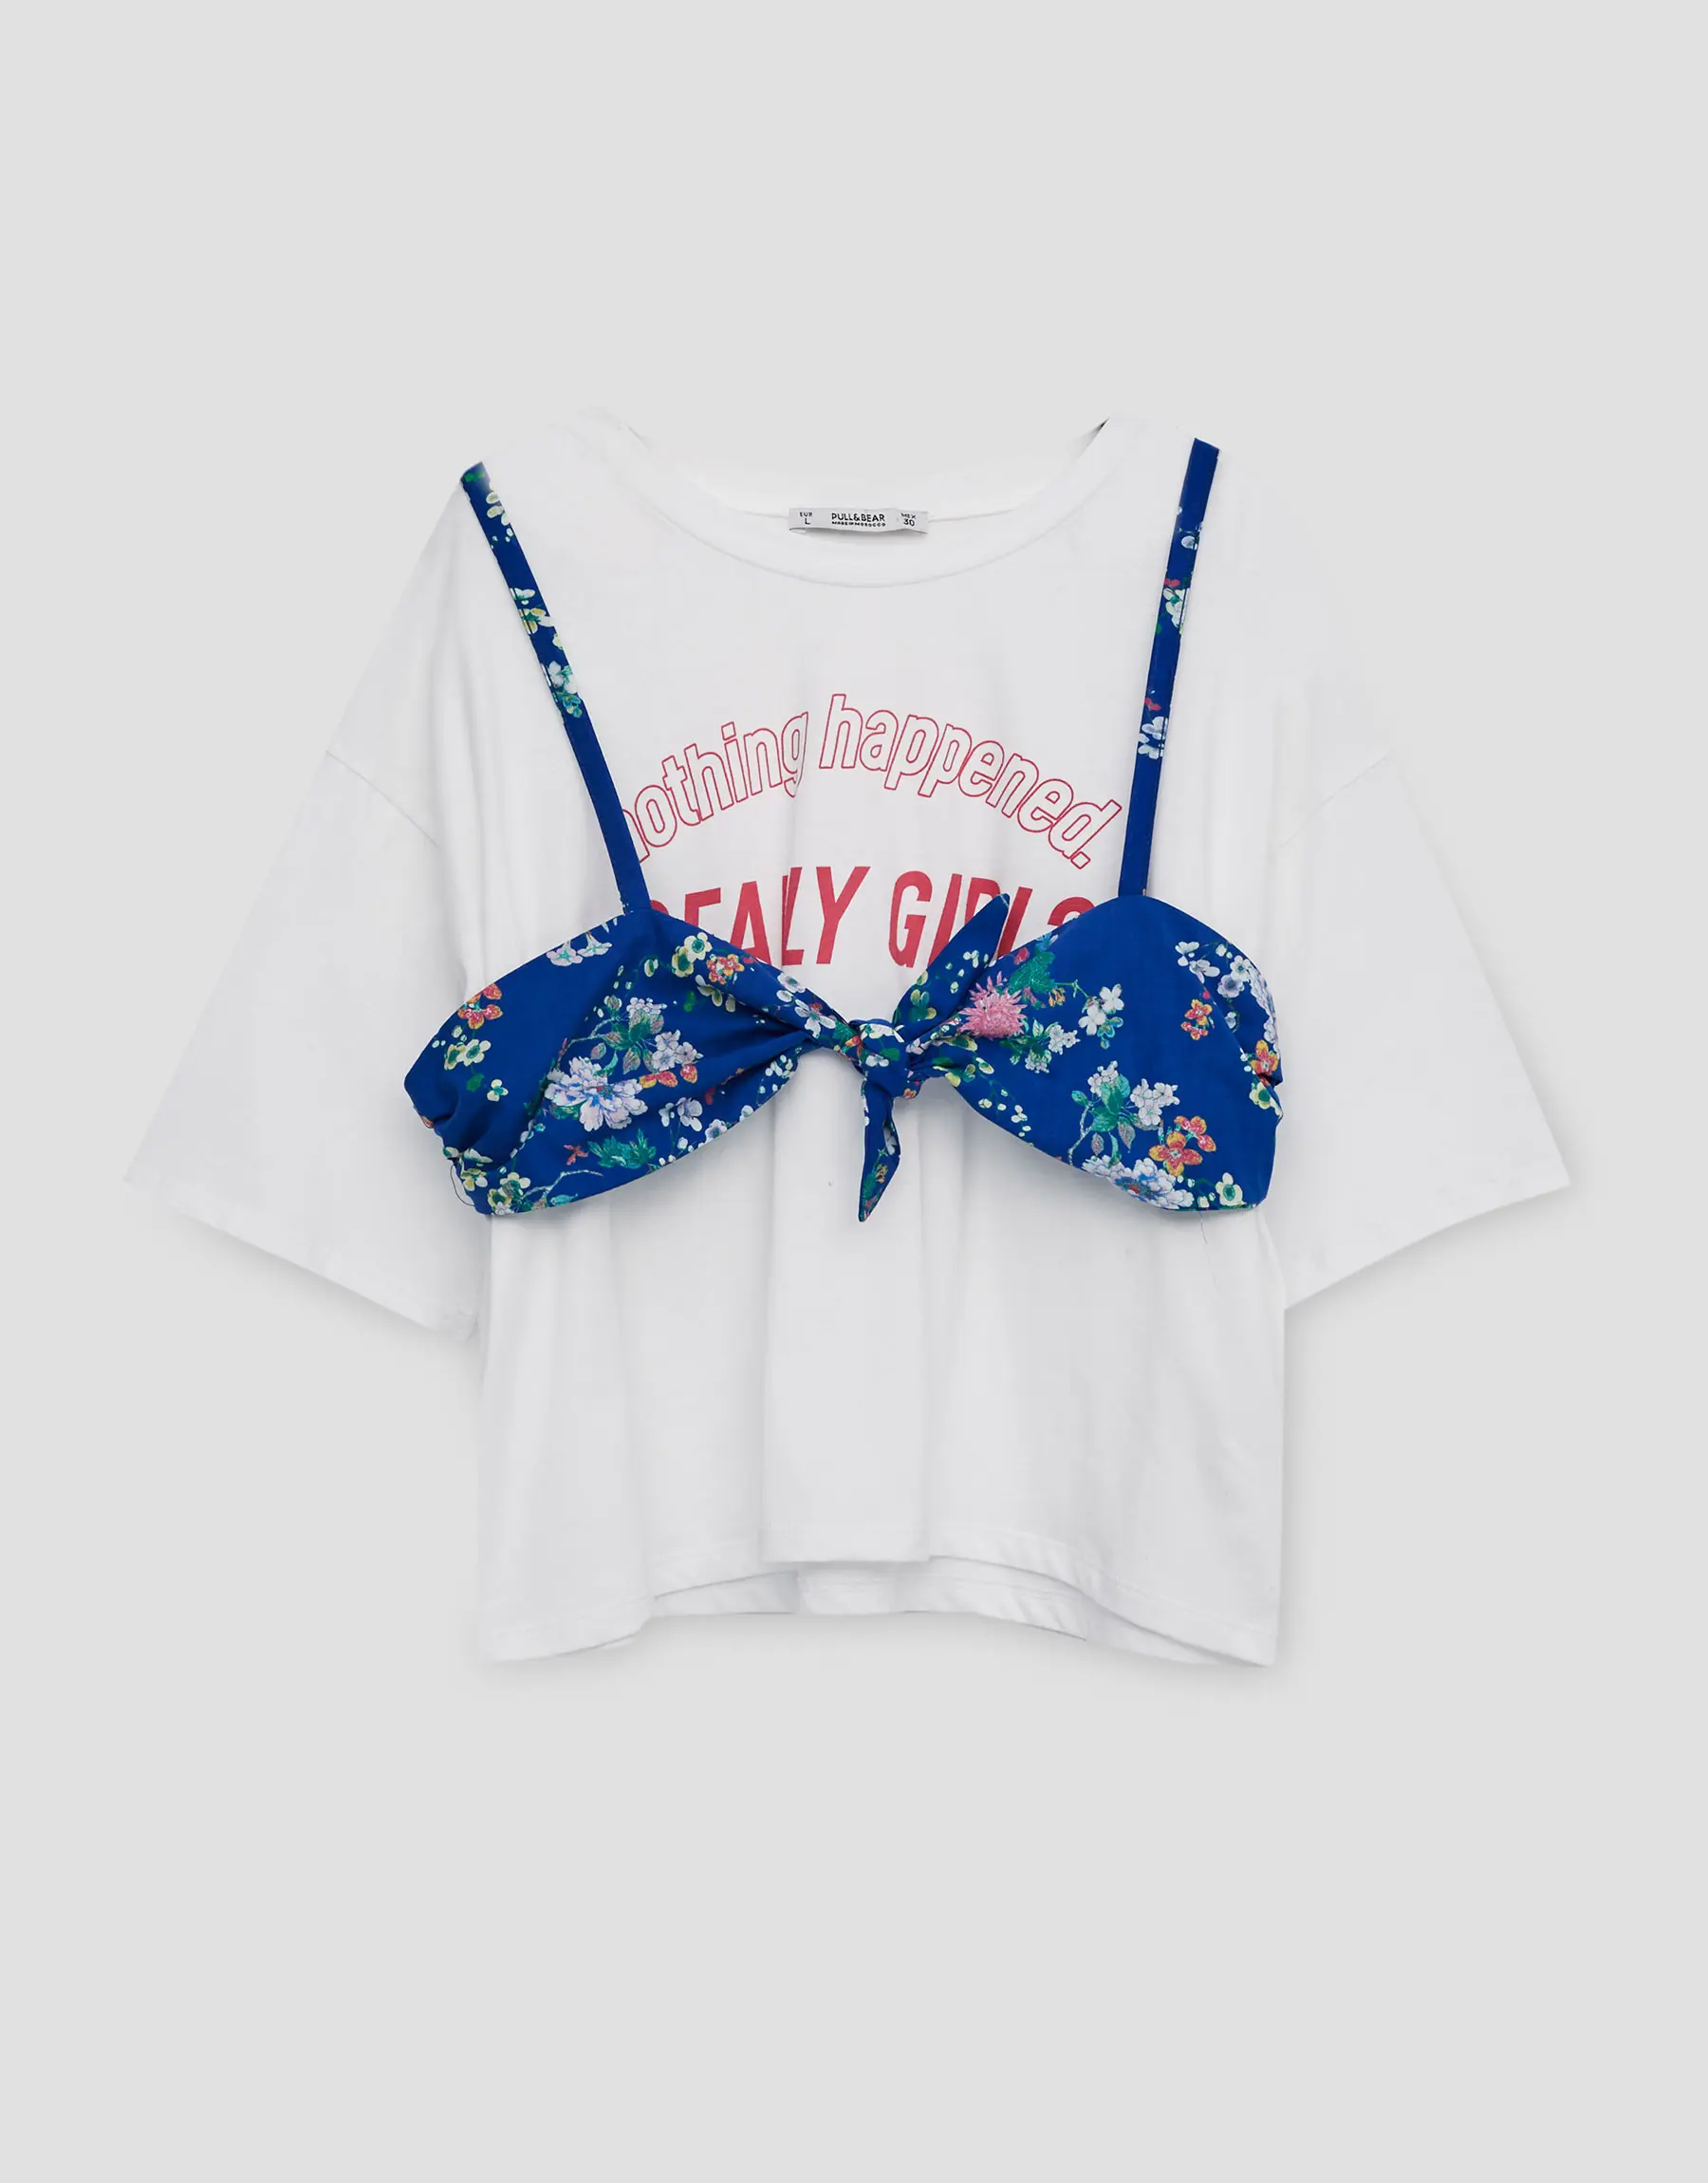 T-shirt with floral print bra top, Rp. 99.900. (Image: pullandbear.com)